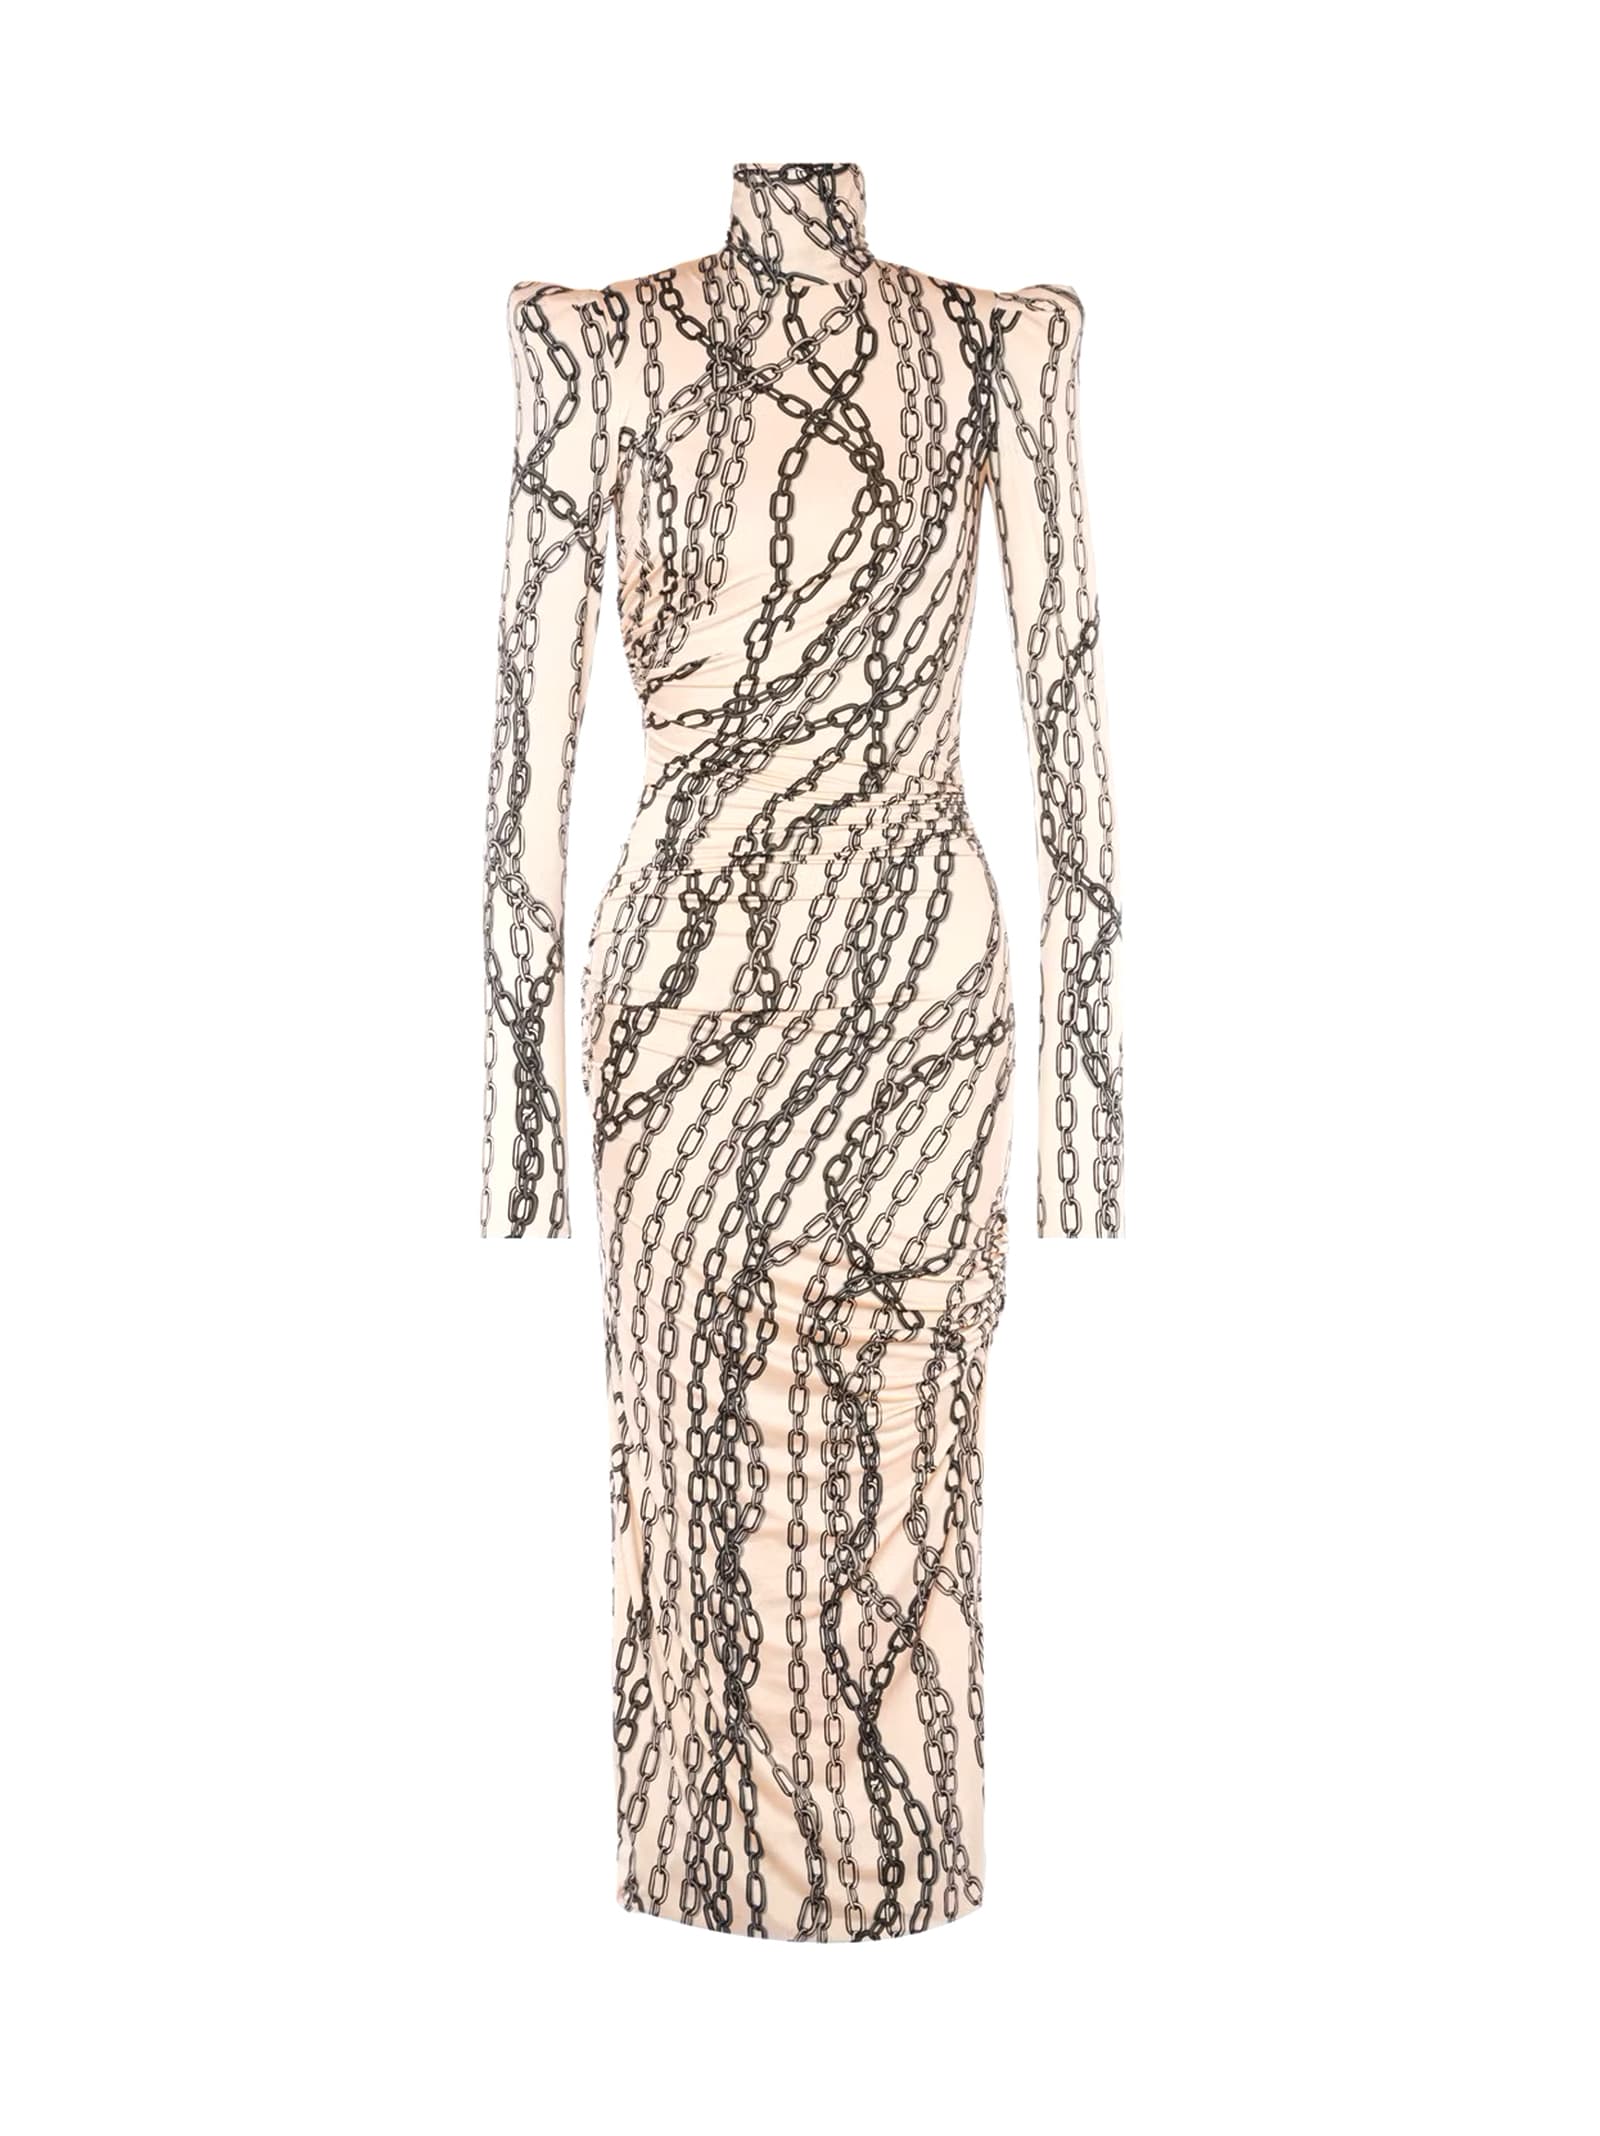 Philosophy di Lorenzo Serafini Stretch Dress With Chains Print